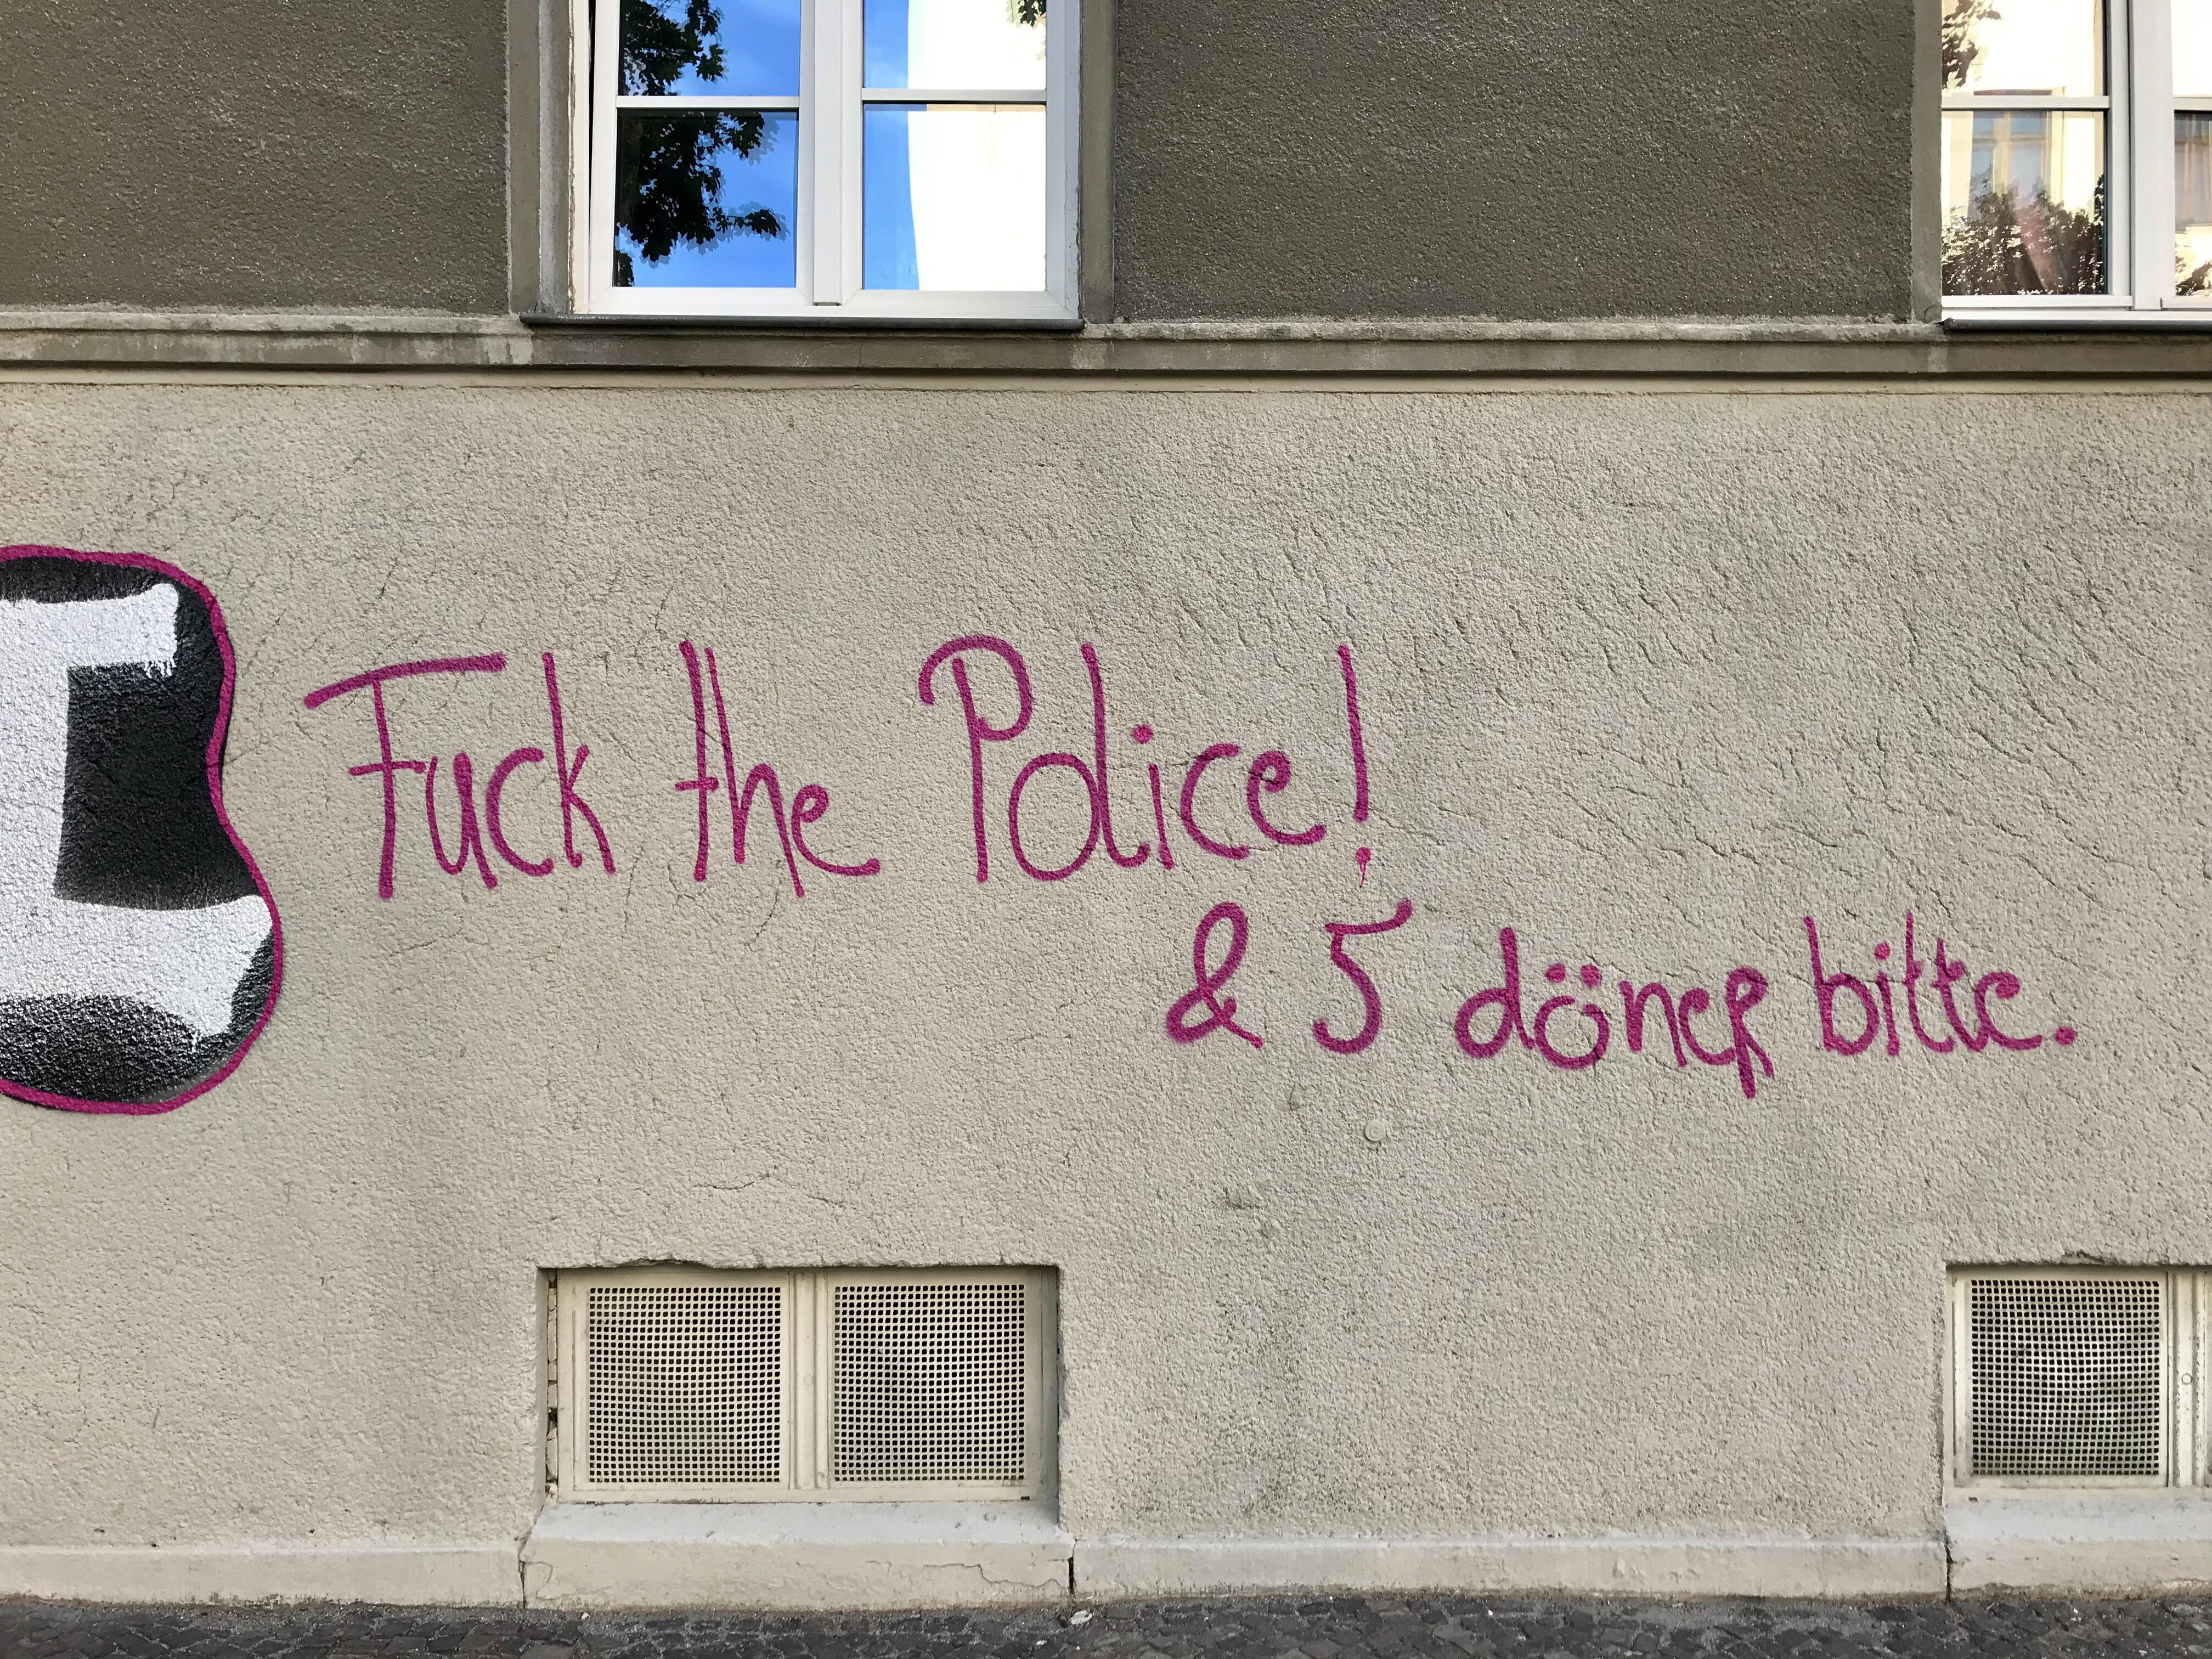 Fuck the Police! & 5 Döner bitte.